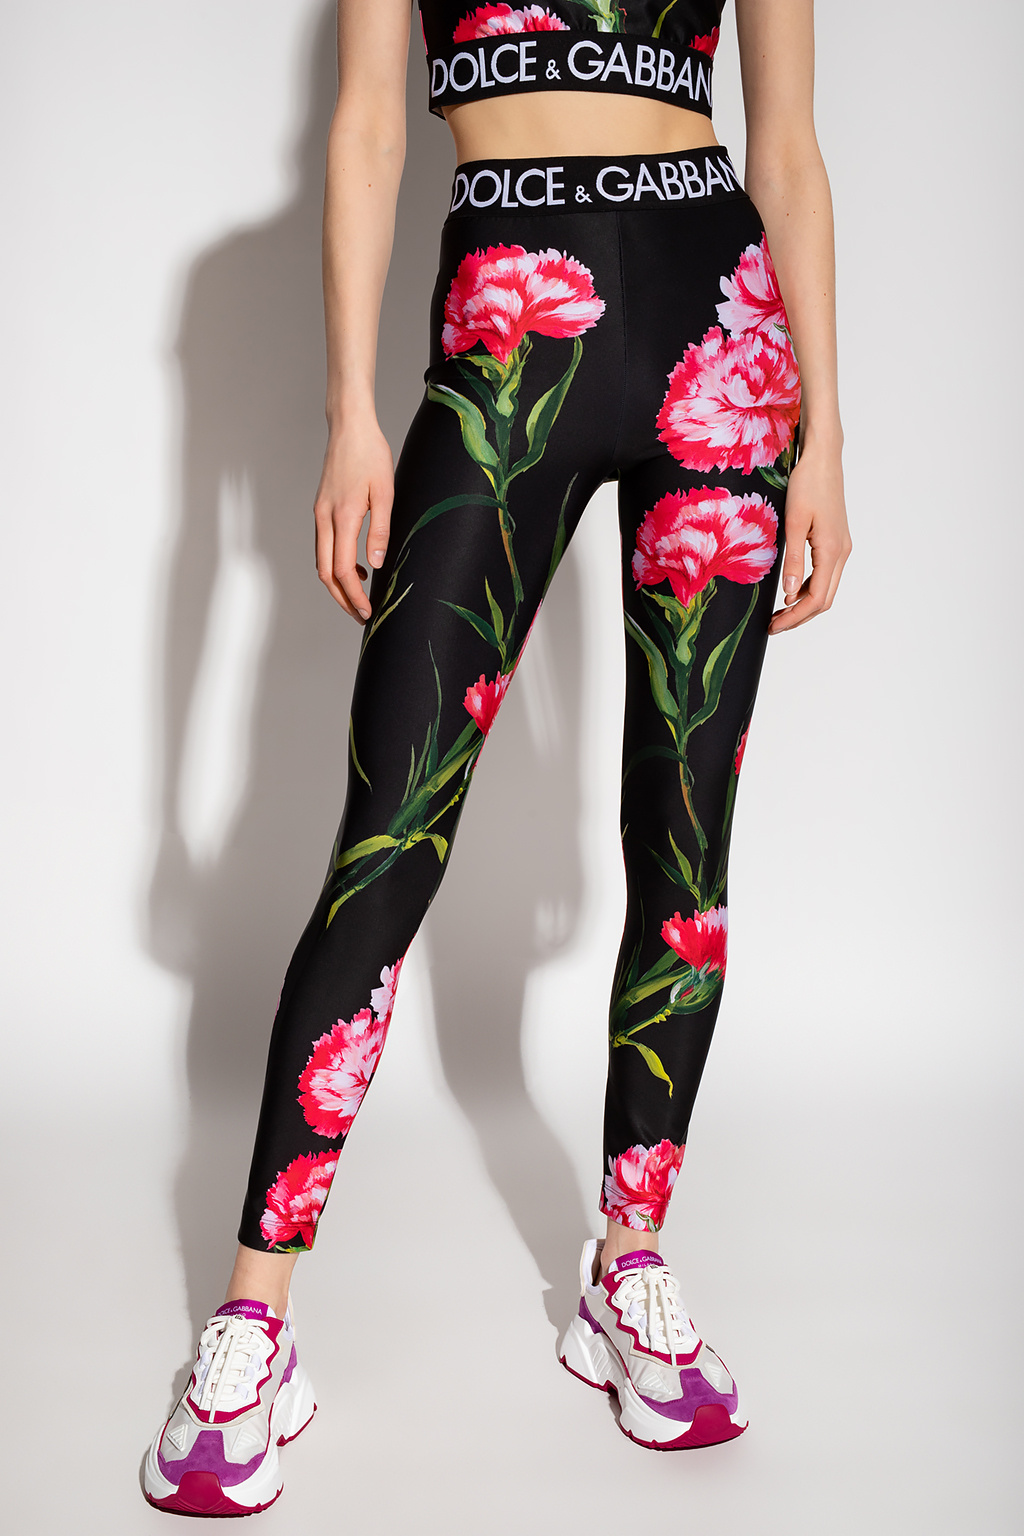 Dolce & Gabbana NS1 logo-graffiti sneakers Black Floral leggings